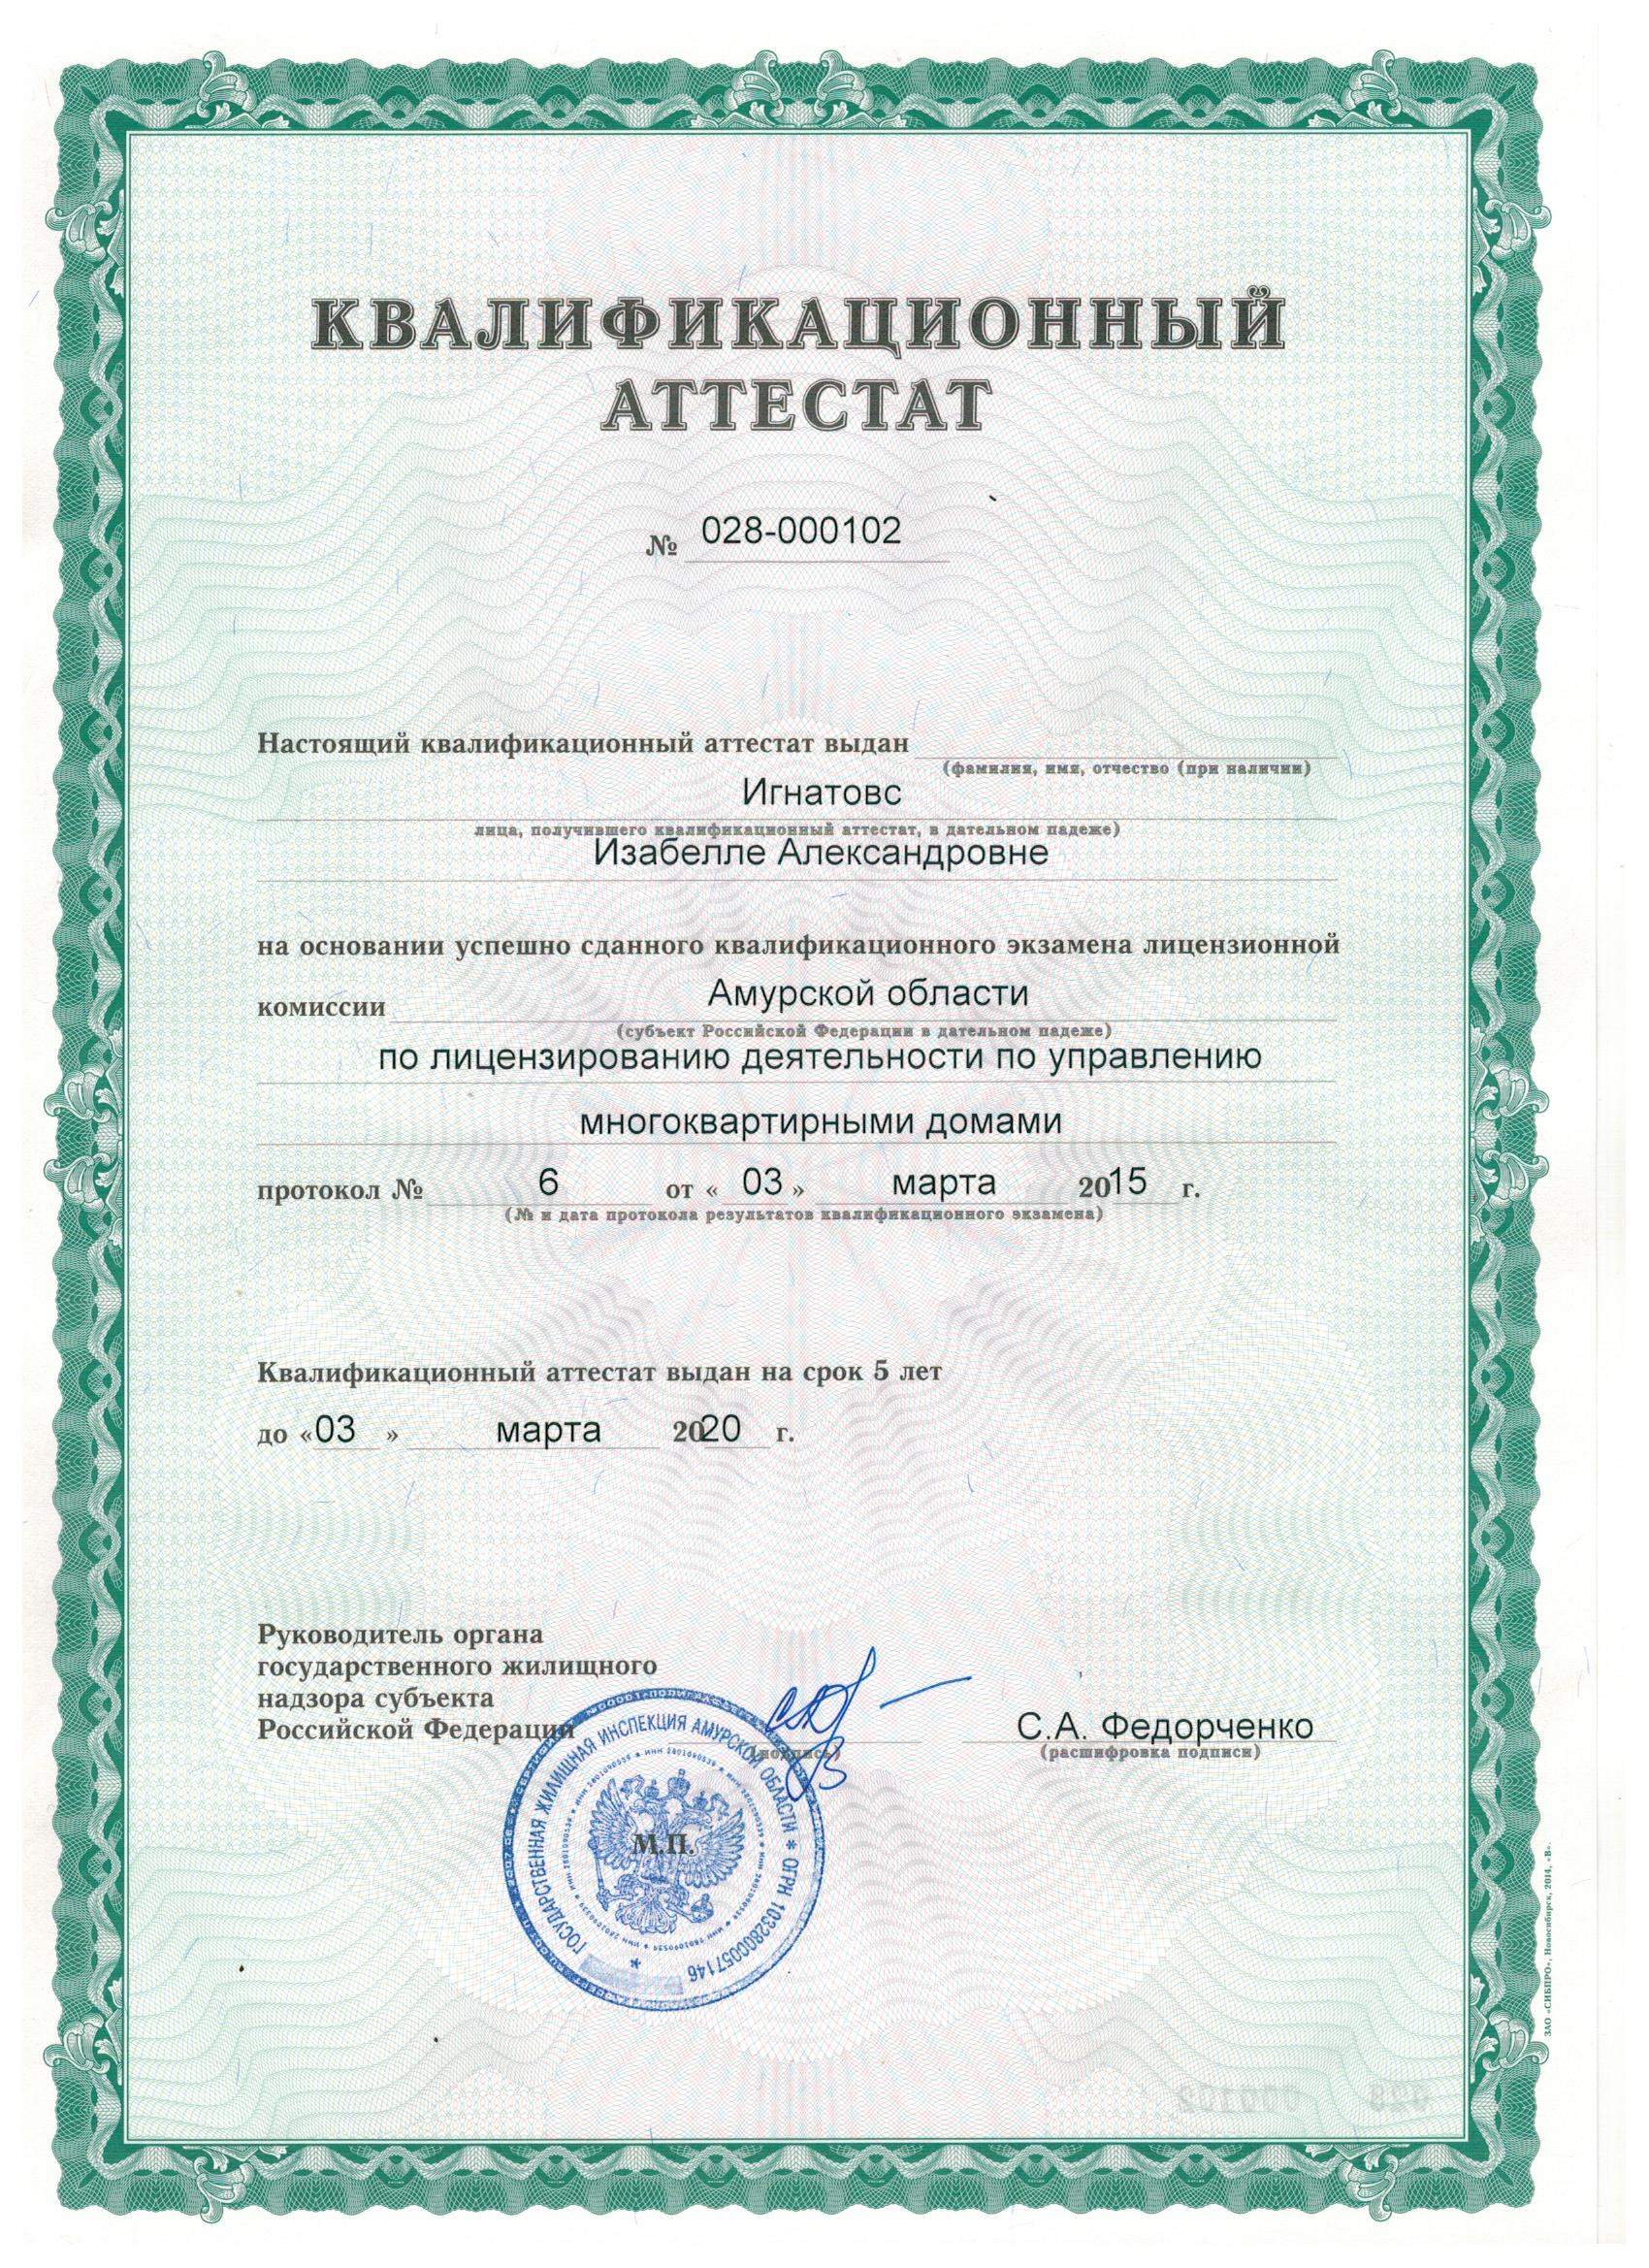 Квалификационный аттестат № 028-000102 от 03.03.2015